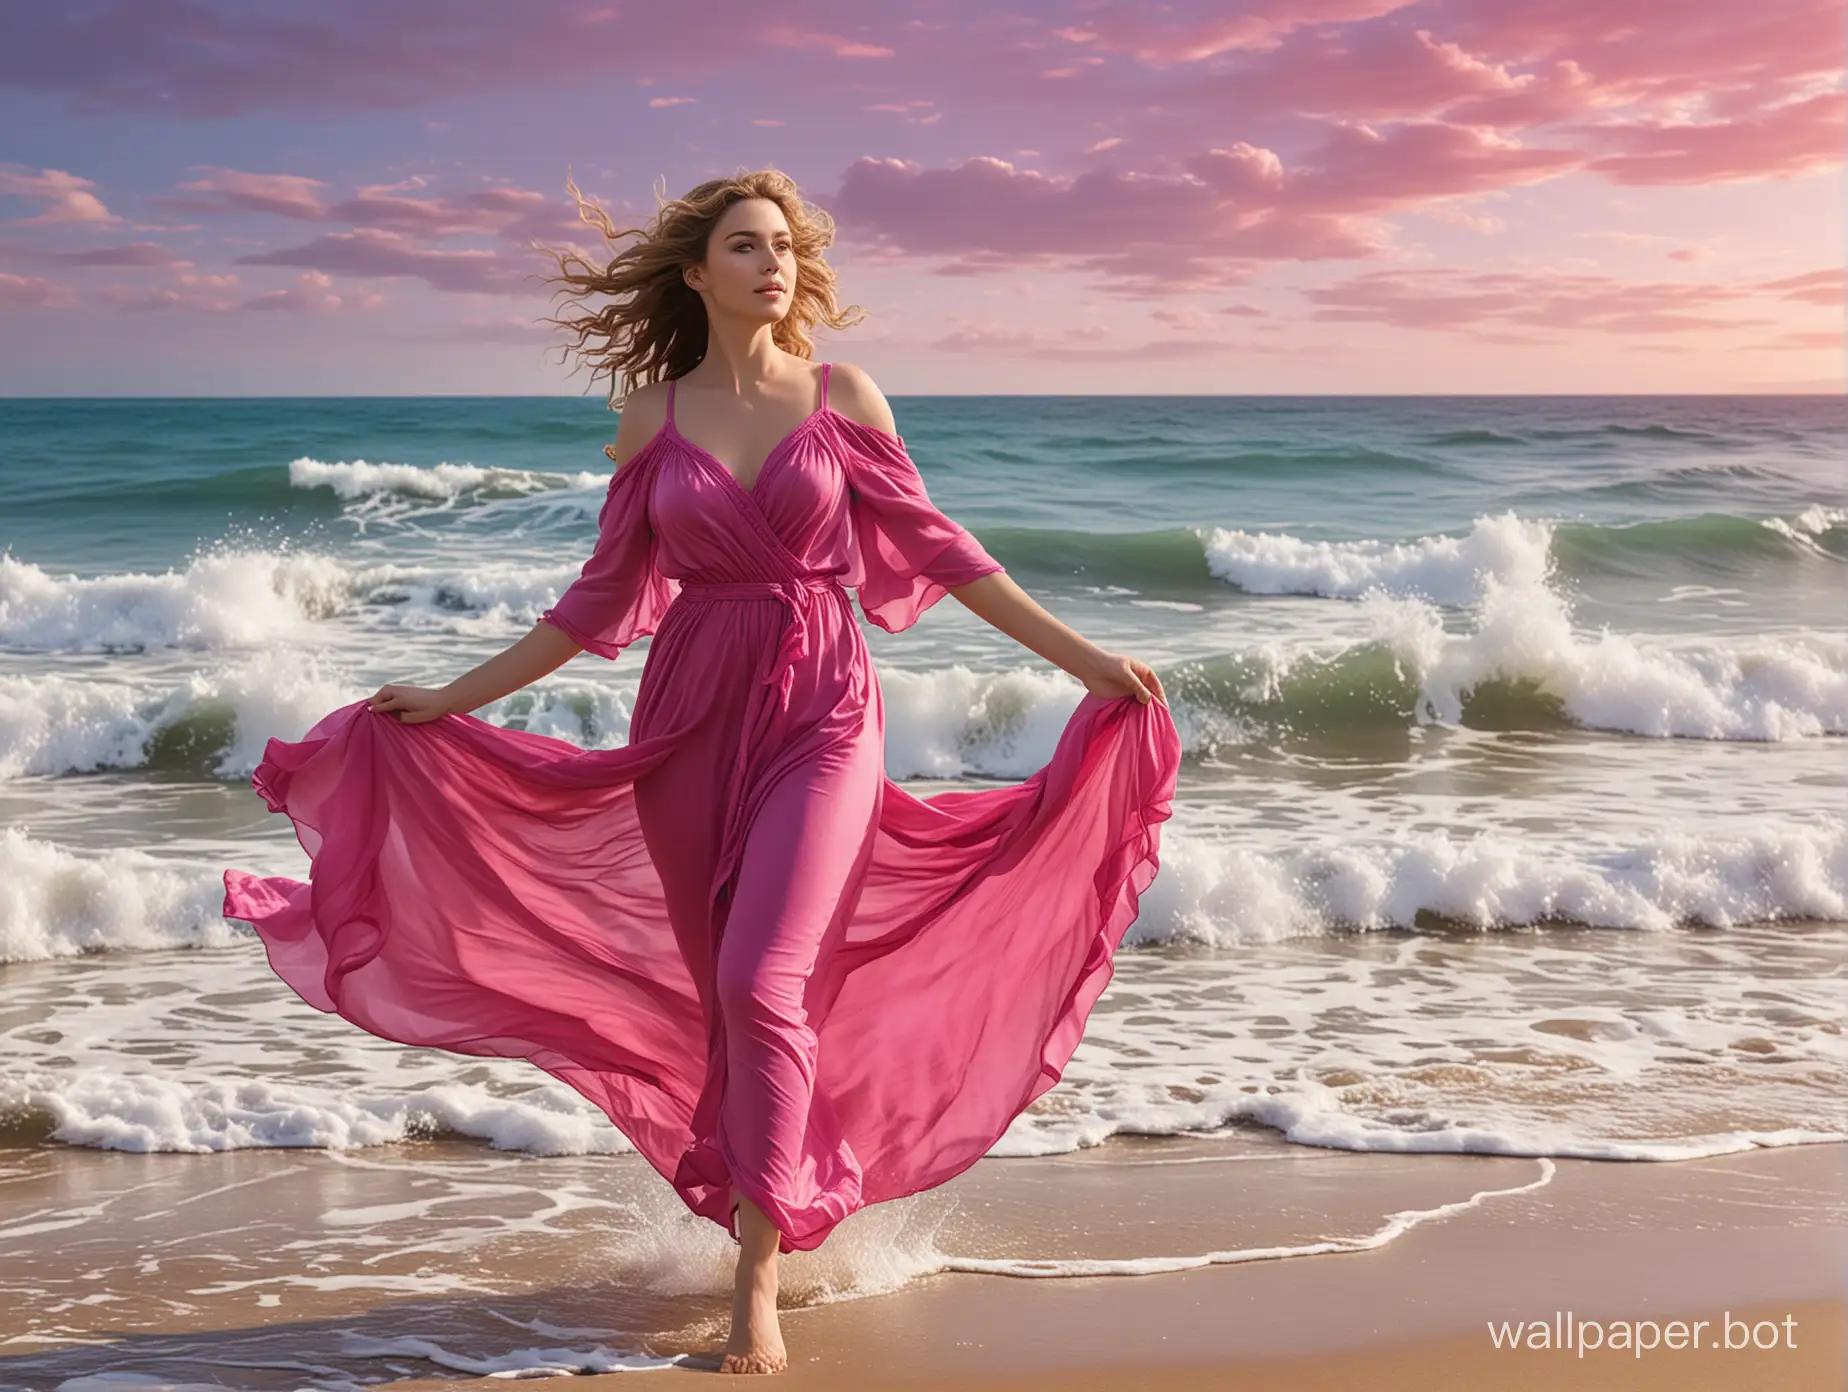 Aphrodite-Goddess-of-Love-Strolling-Seaside-in-Fuchsia-Tunic